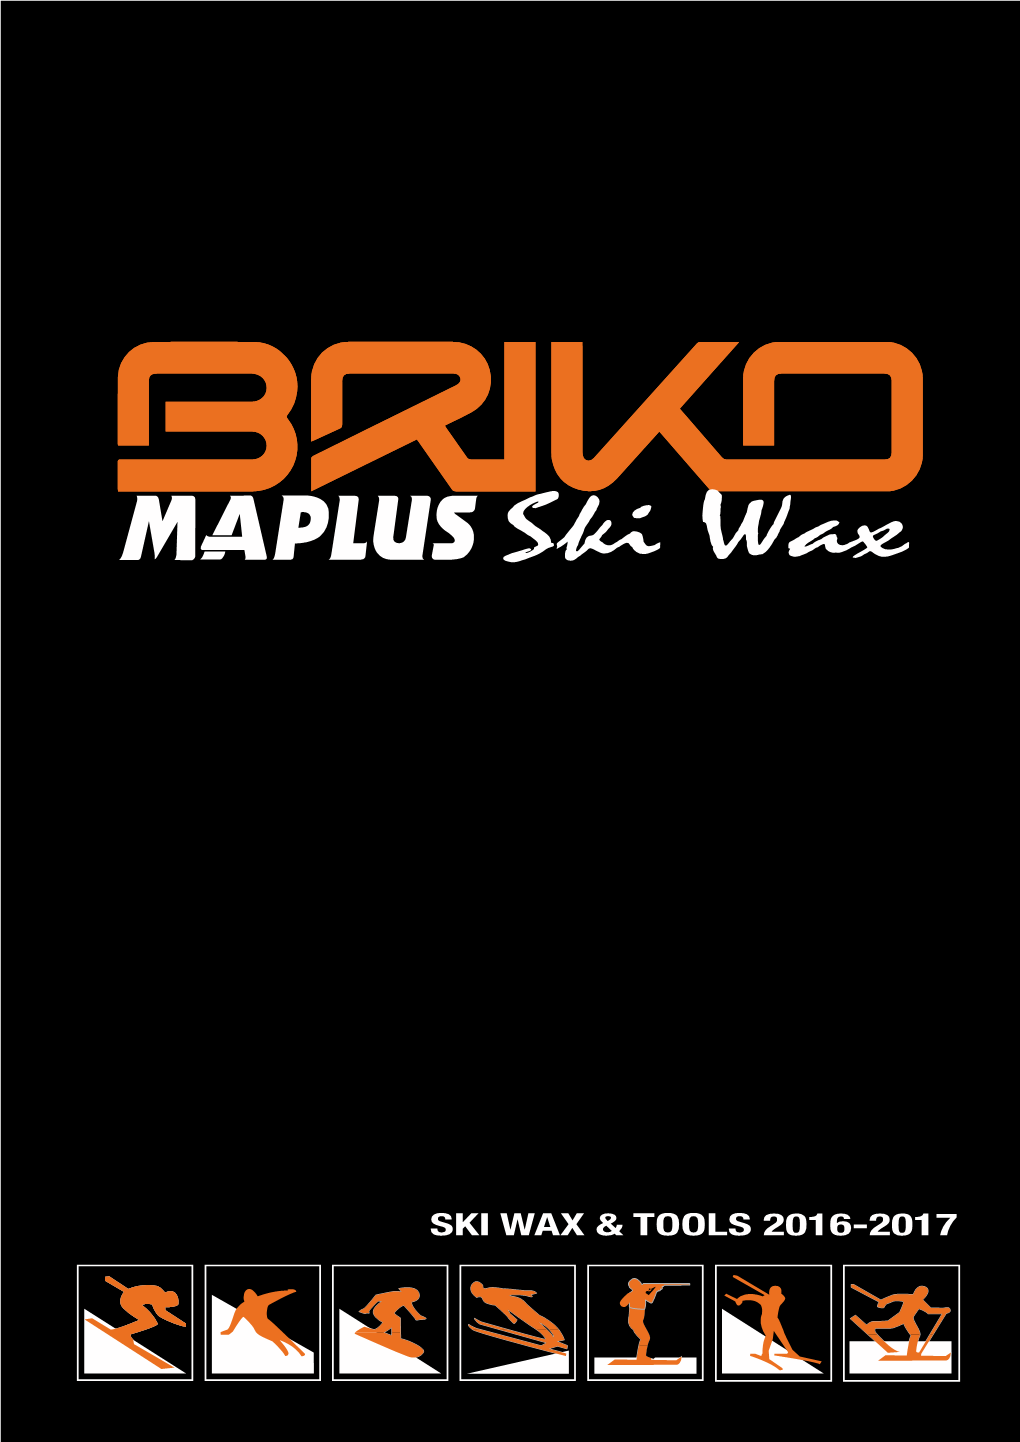 Ski Wax & Tools 2016-2017